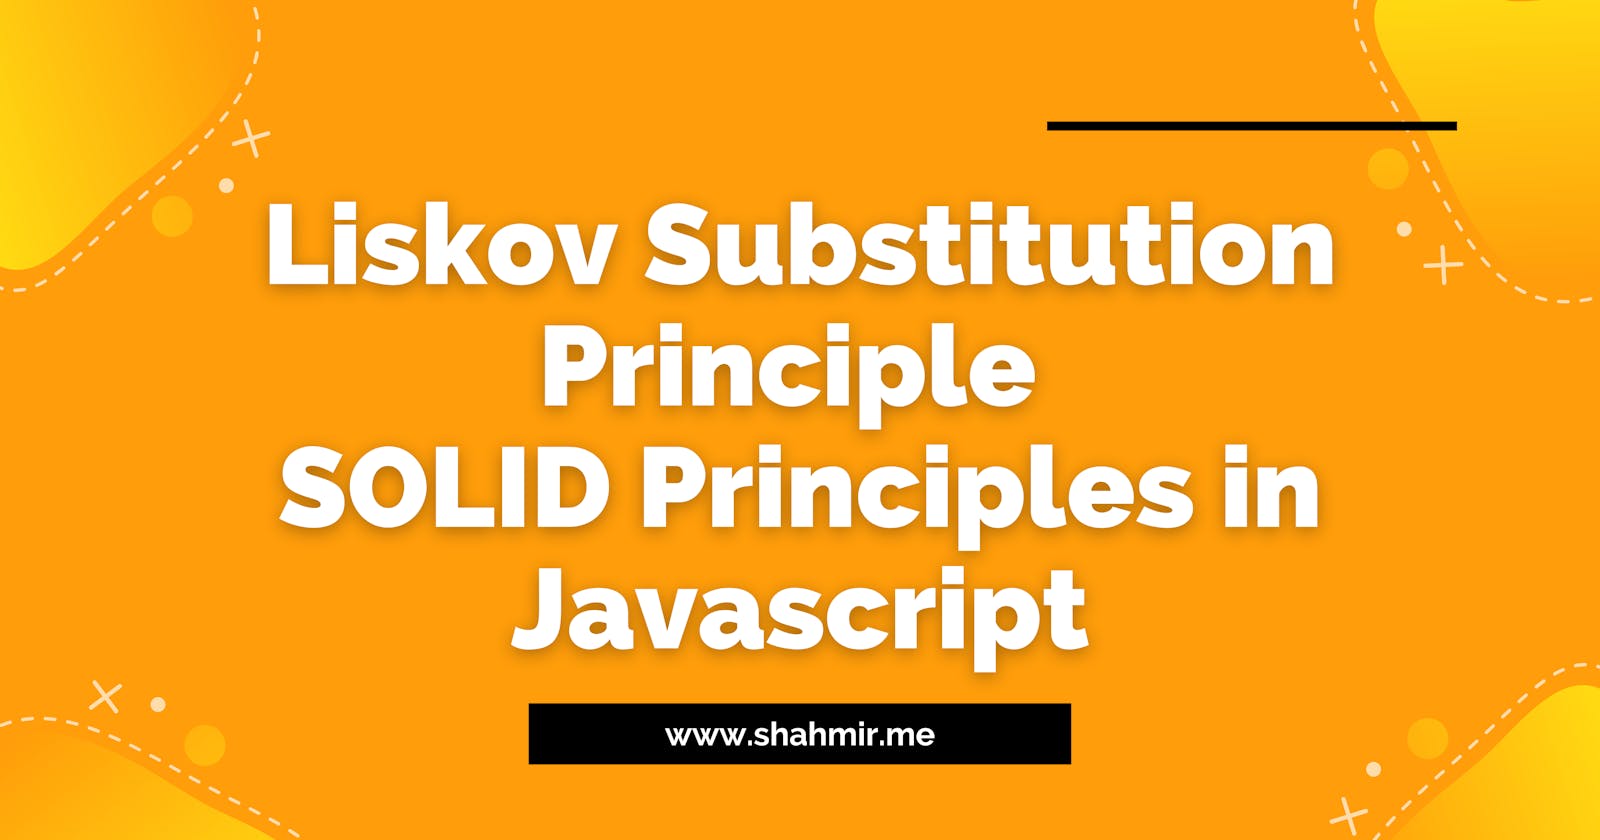 Liskov Substitution Principle - SOLID Principles in Javascript